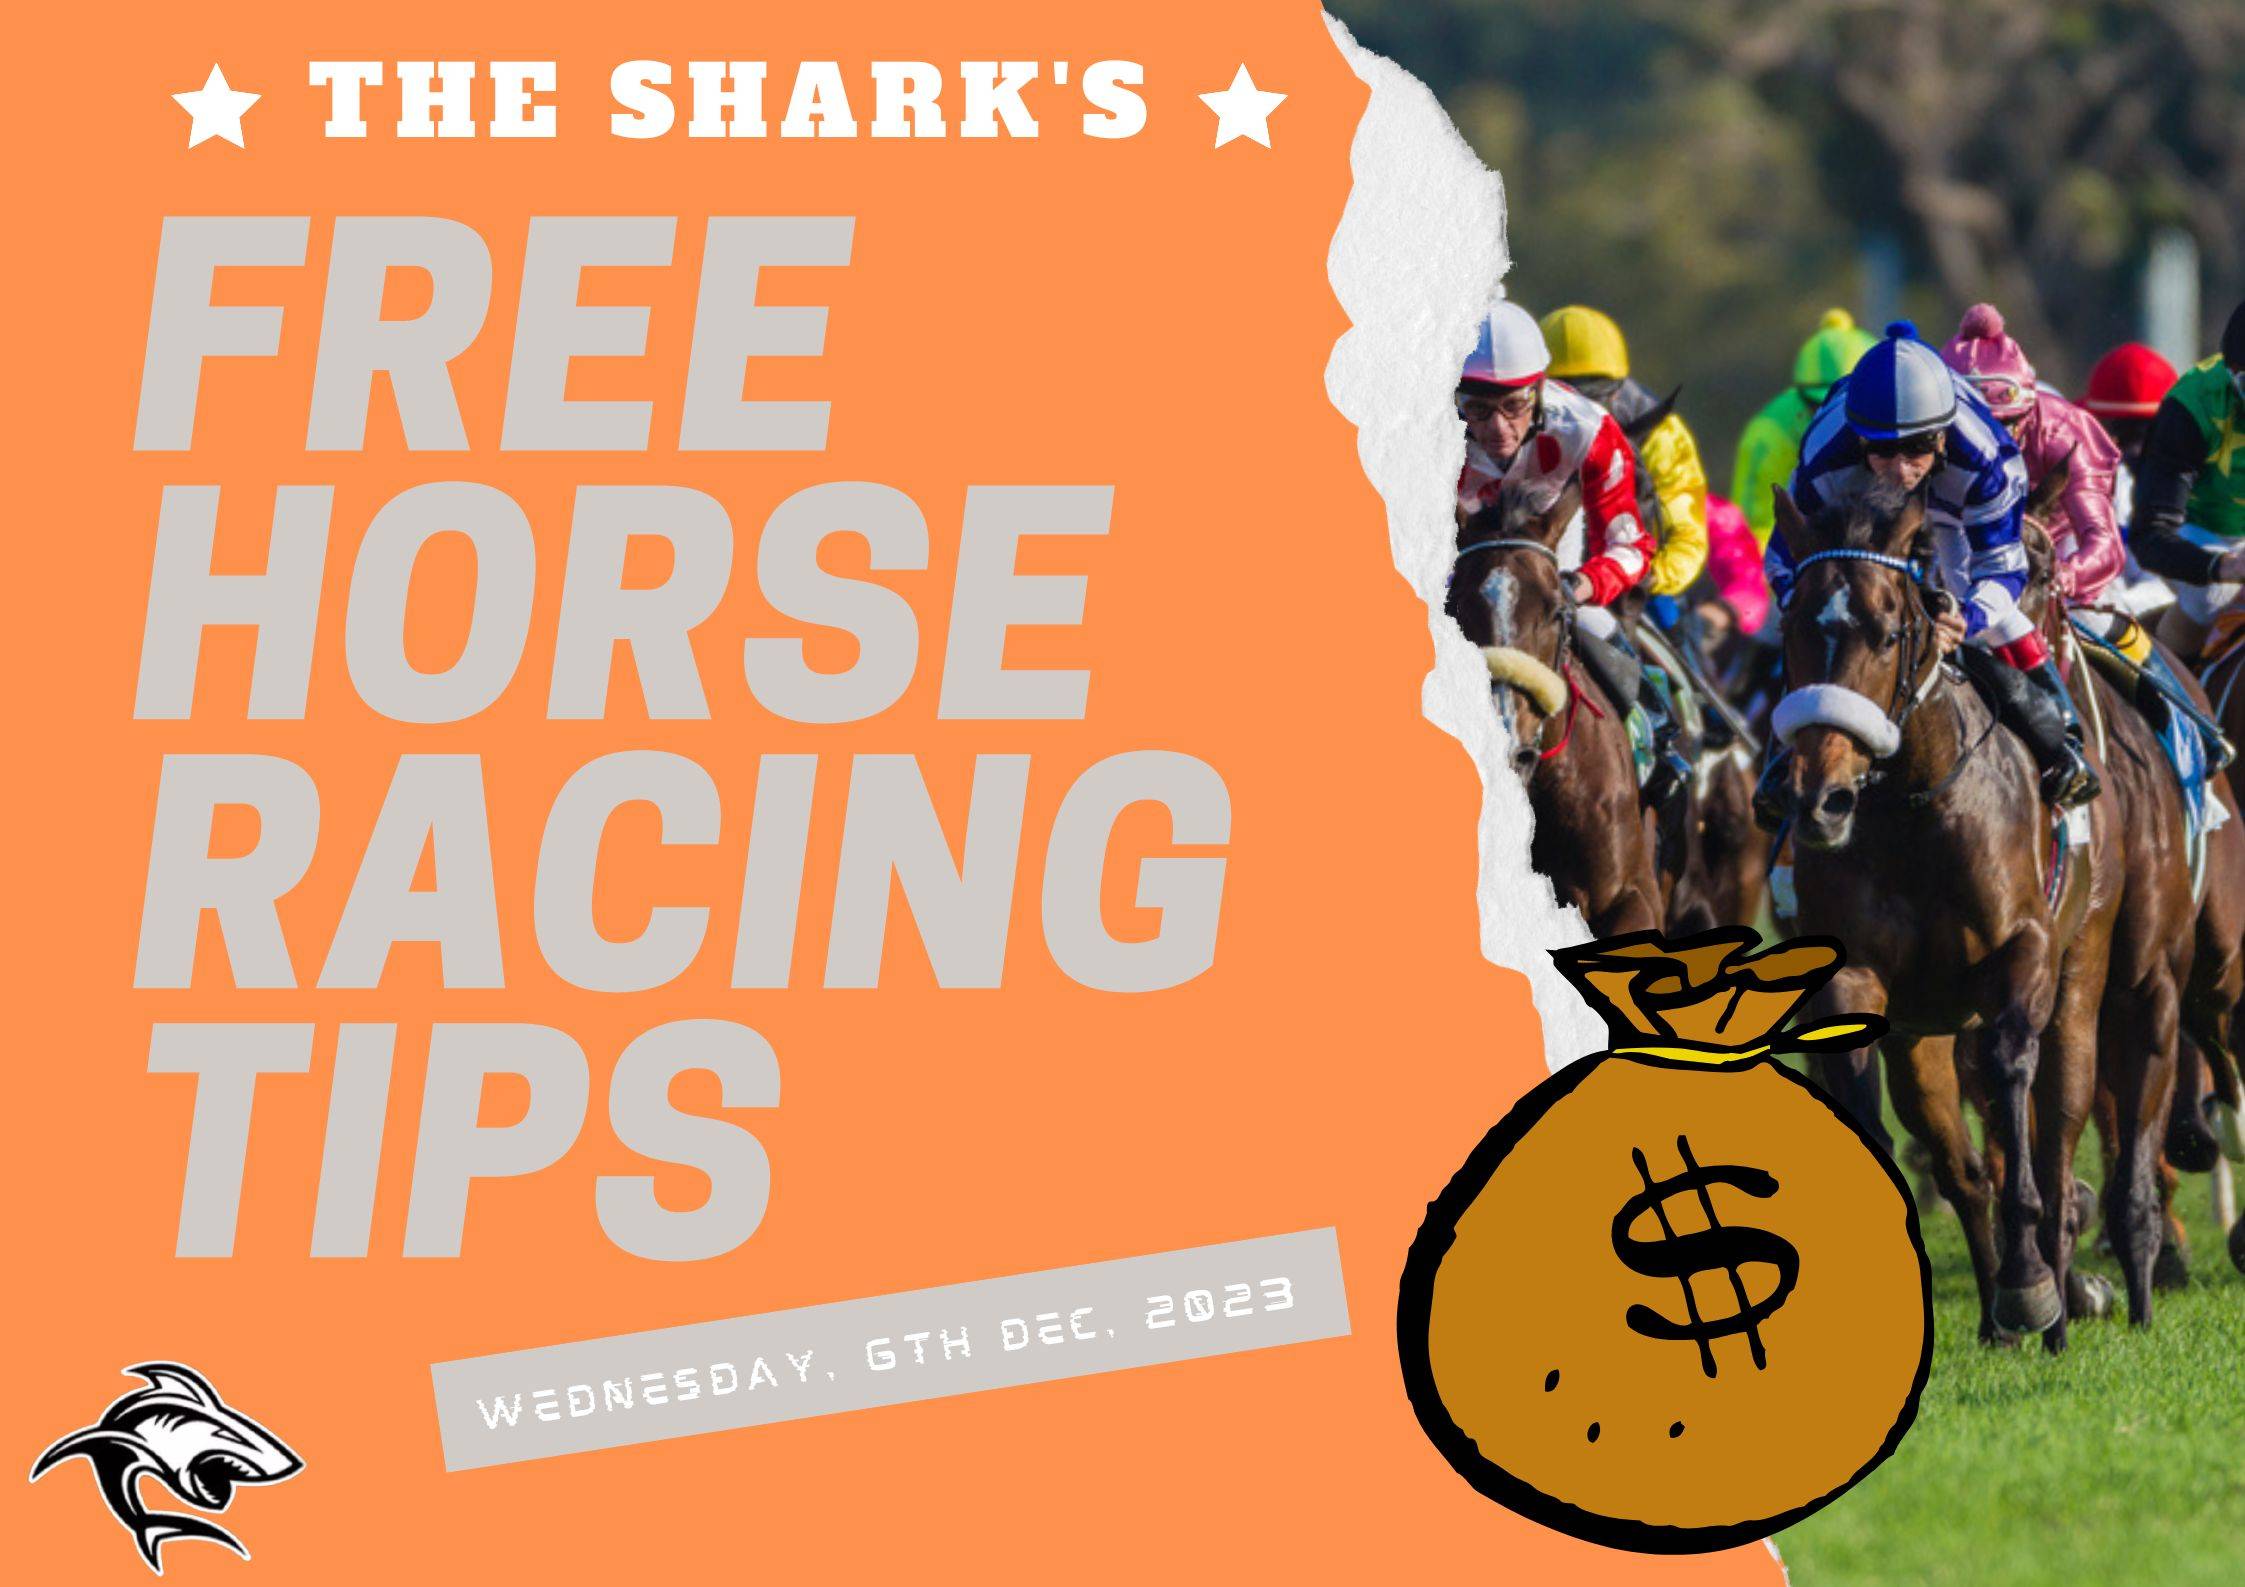 Free Horse Racing Tips - 6th Dec